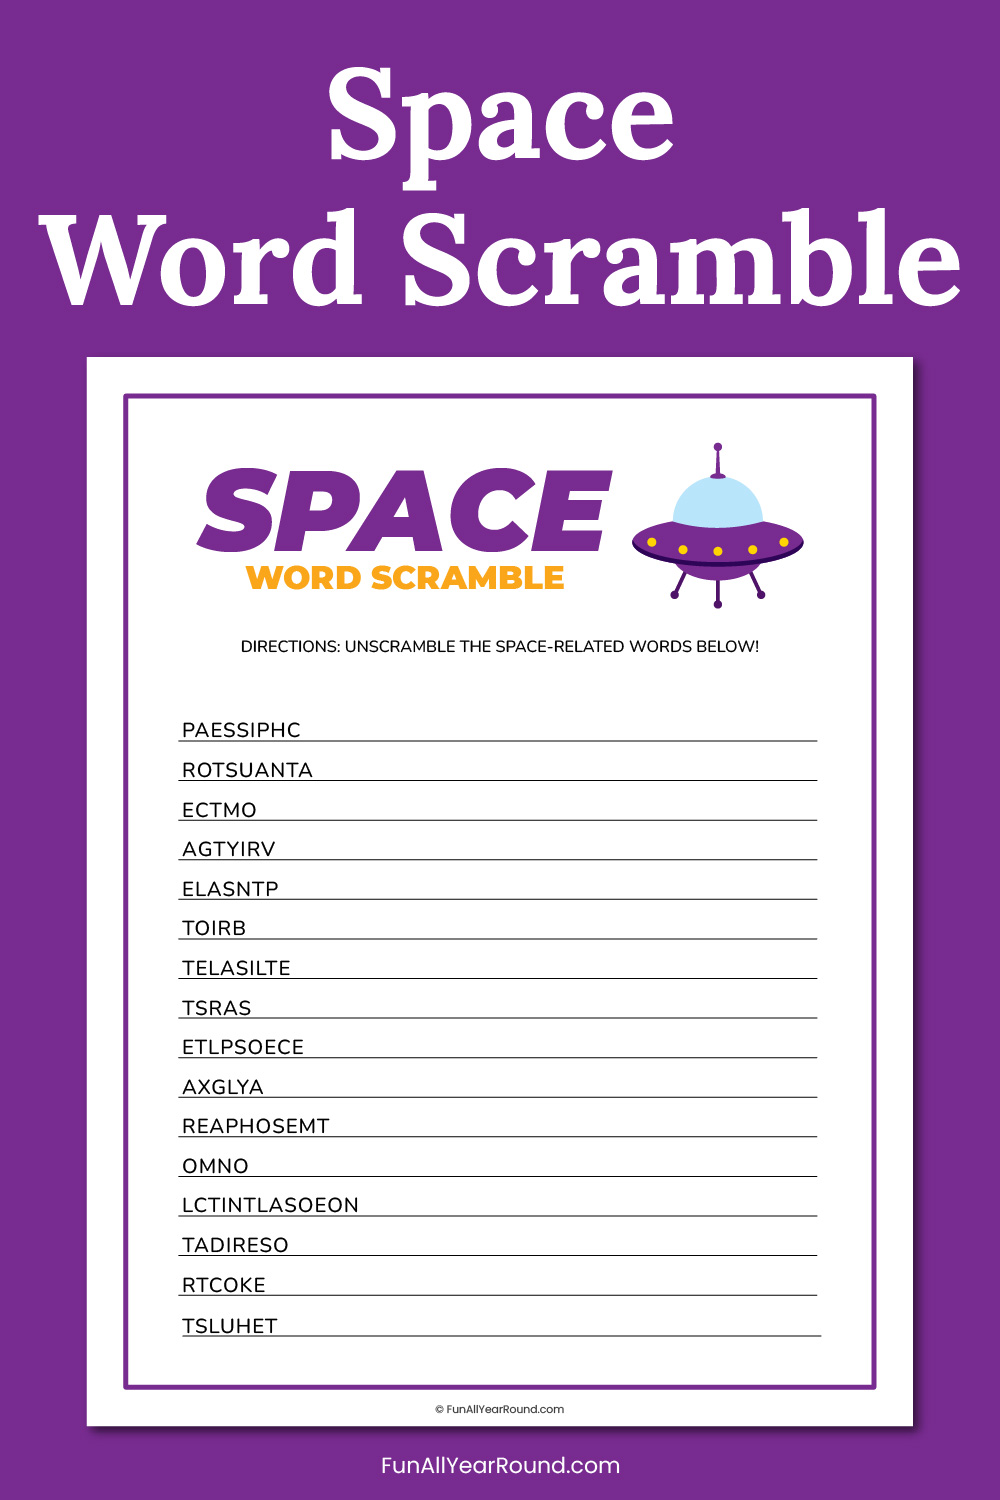 Space word scramble